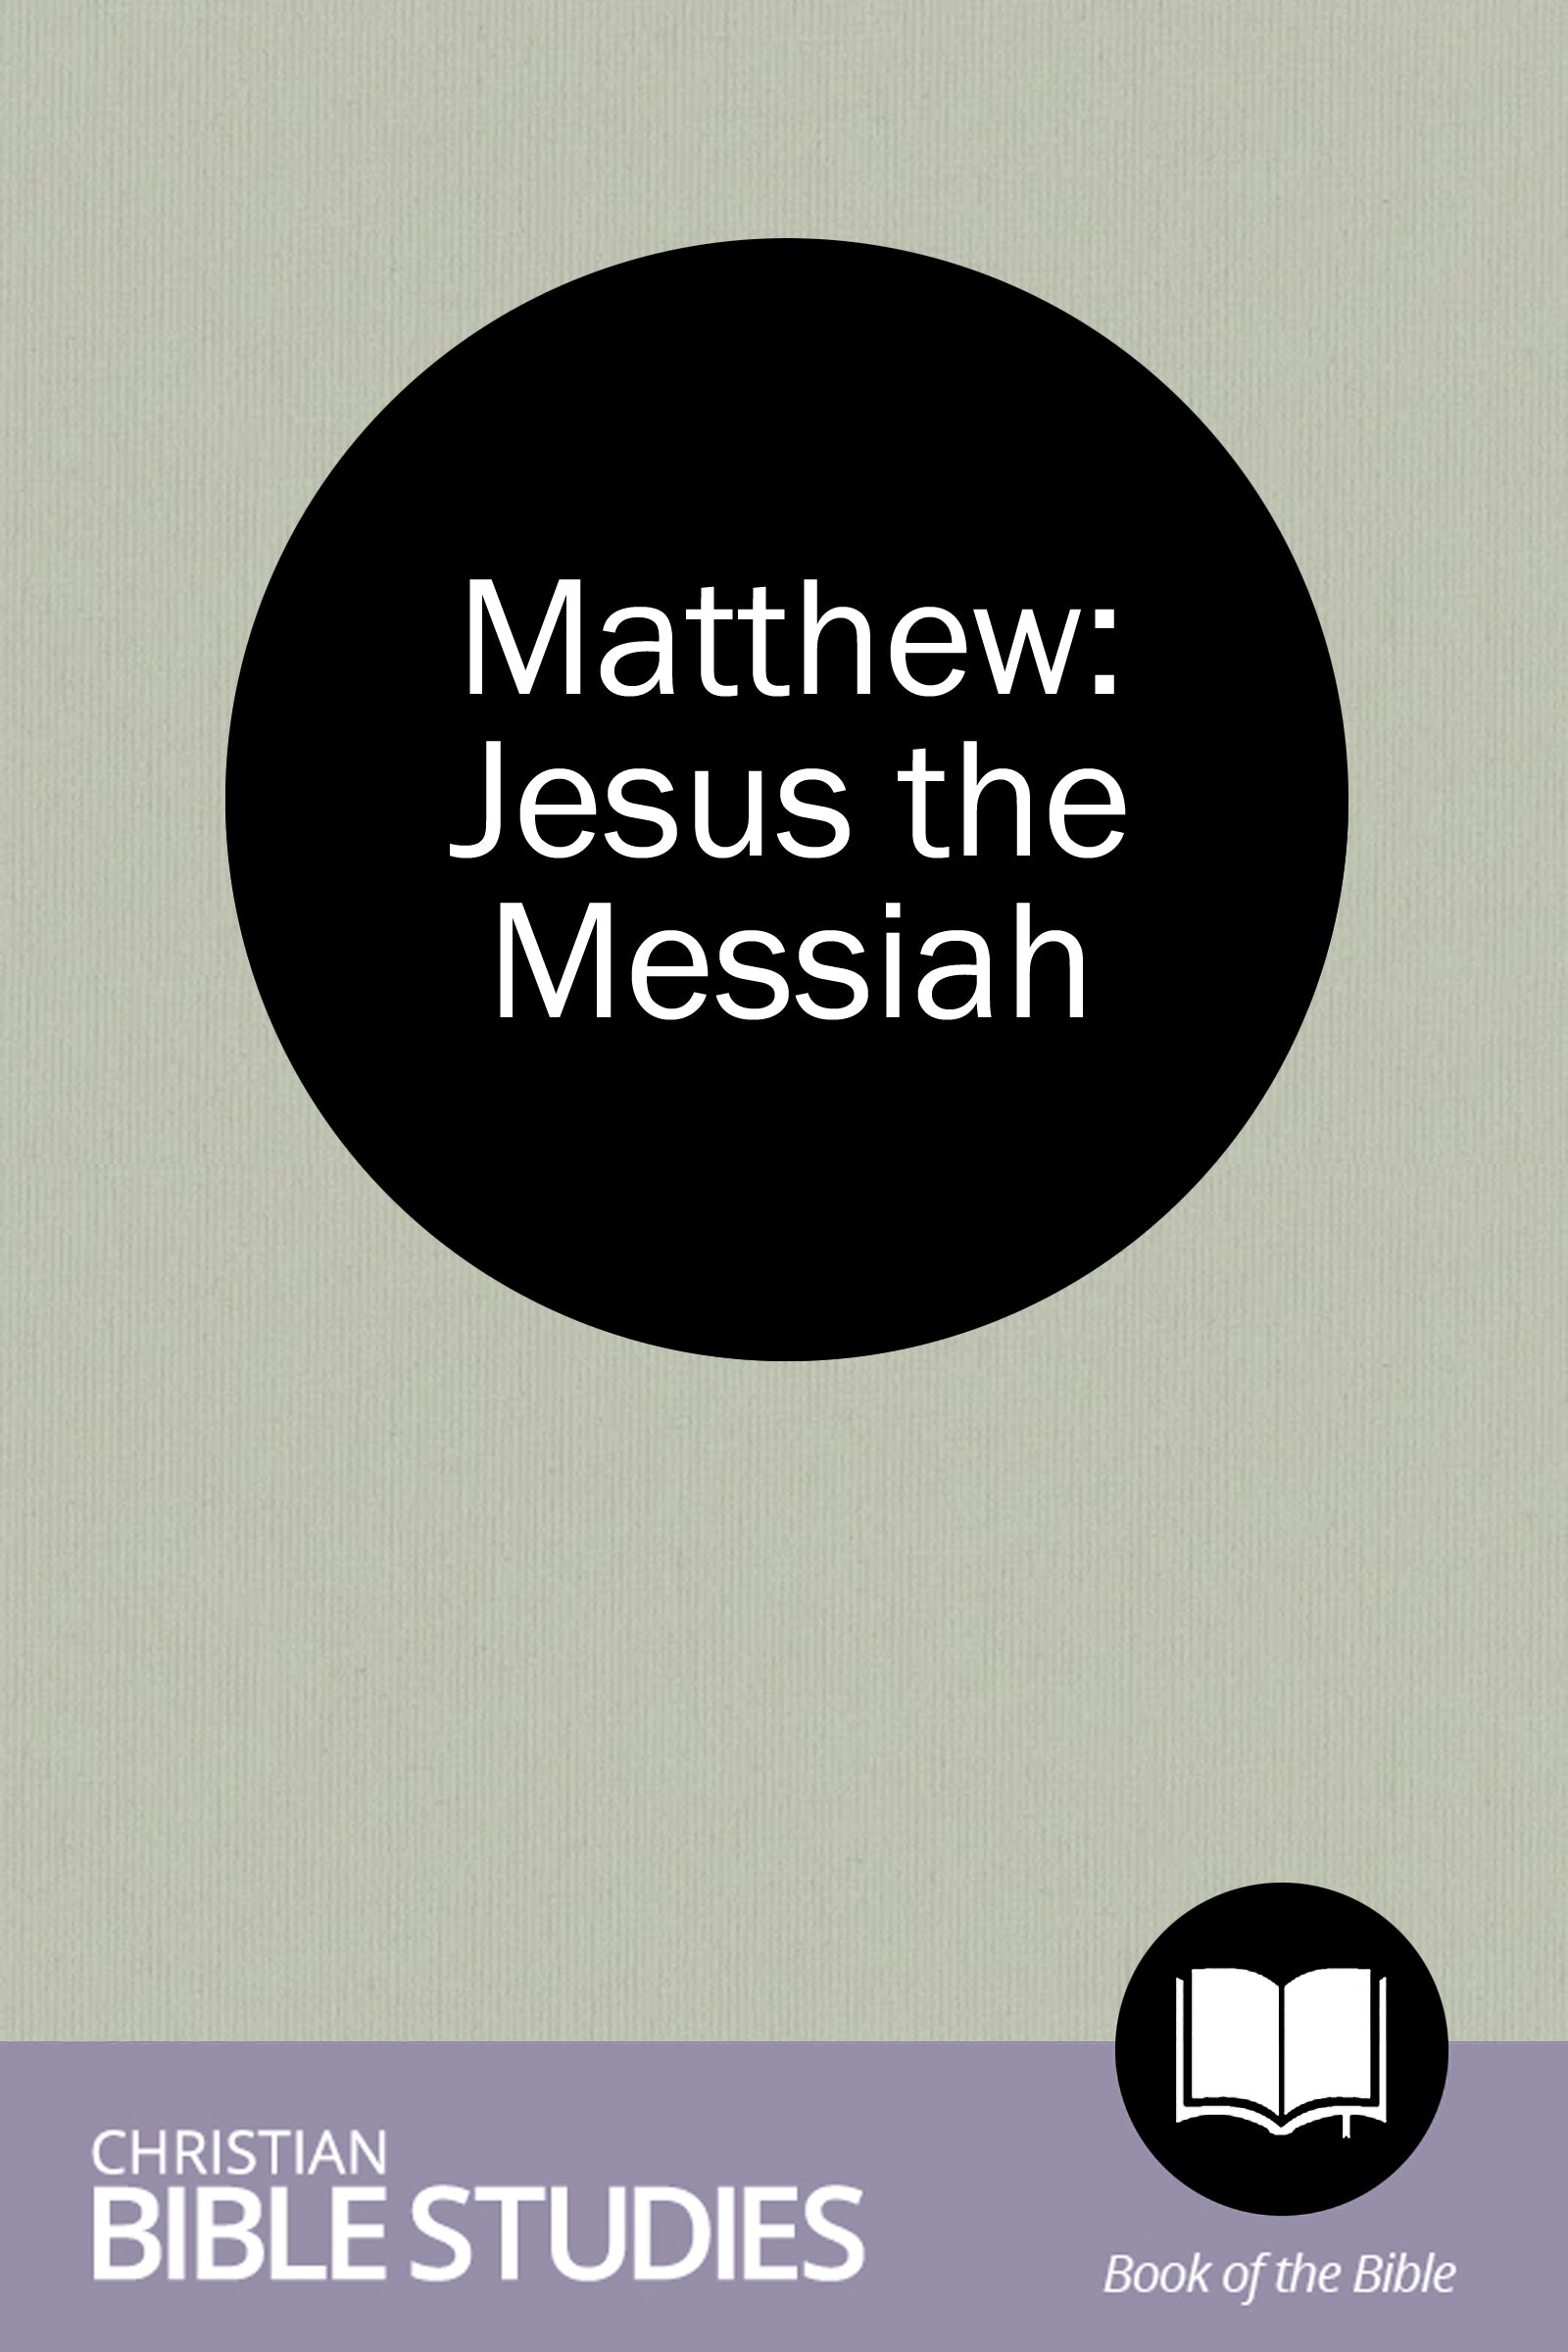 Matthew: Jesus the Messiah